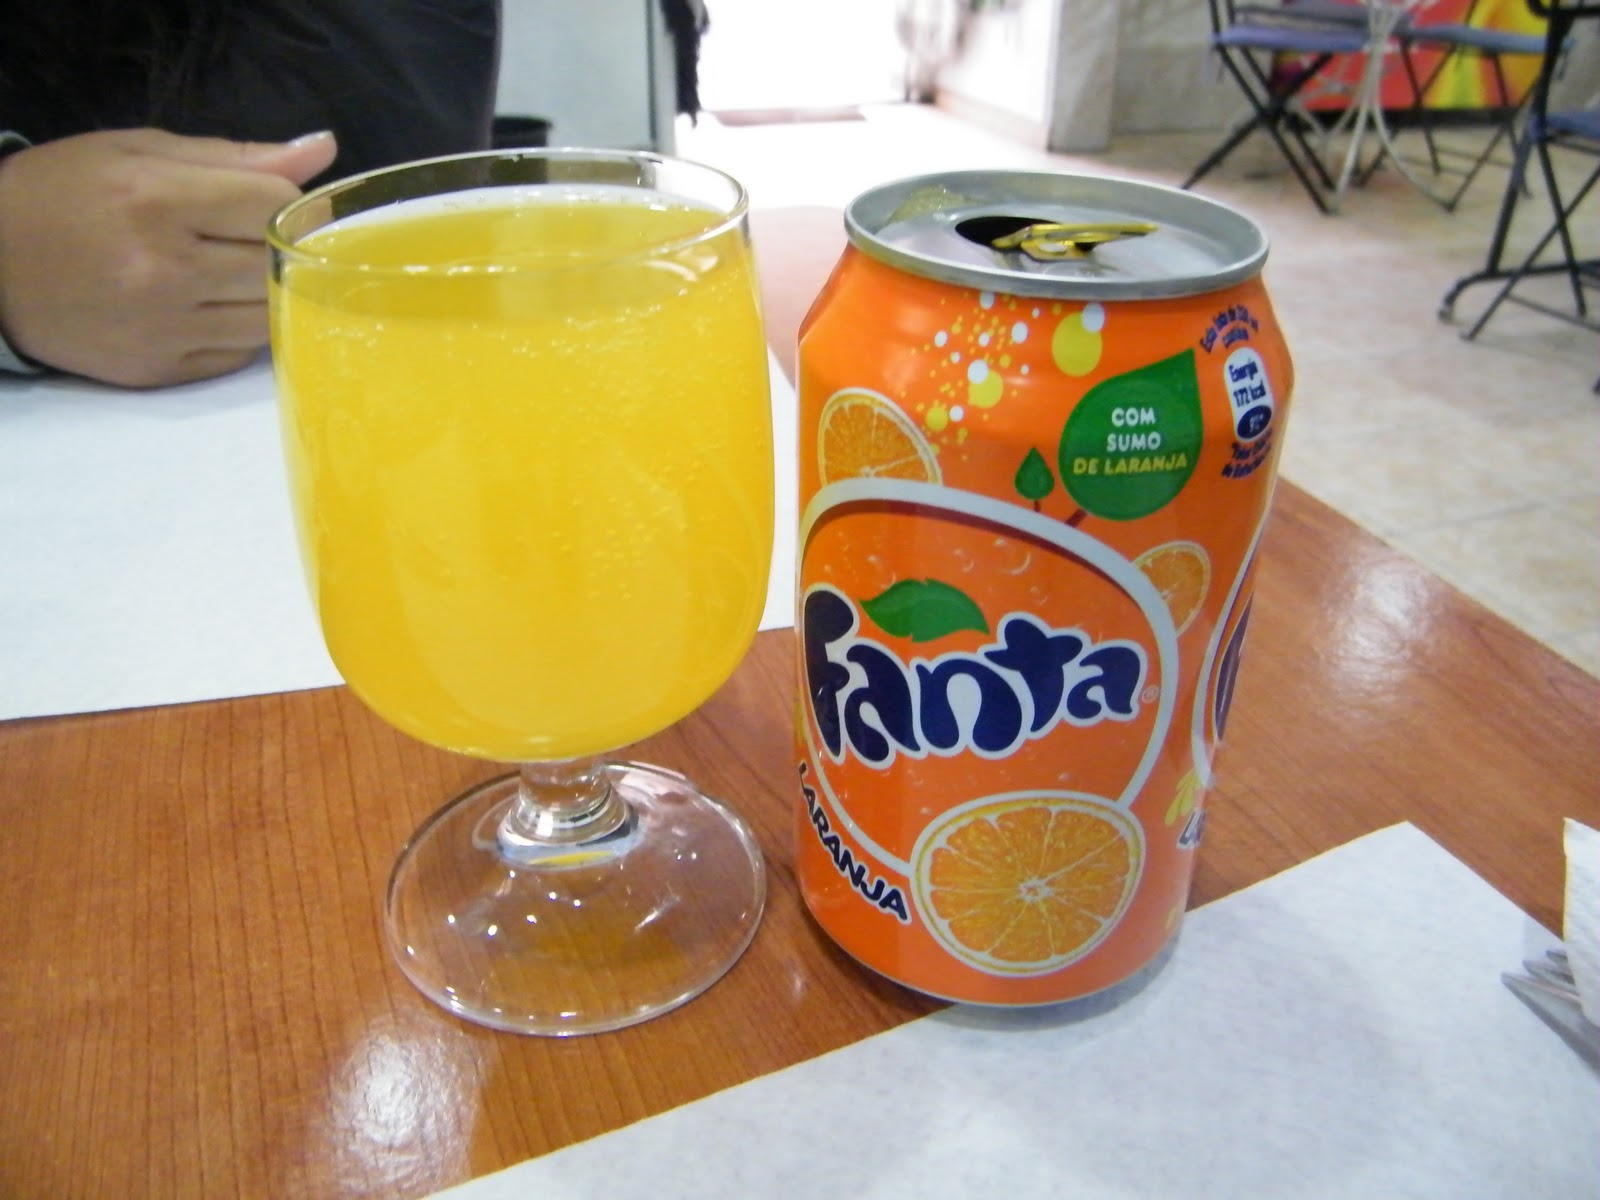 Fanta Laranja Lata (330ml) - Fanta Orange Can (330ml)